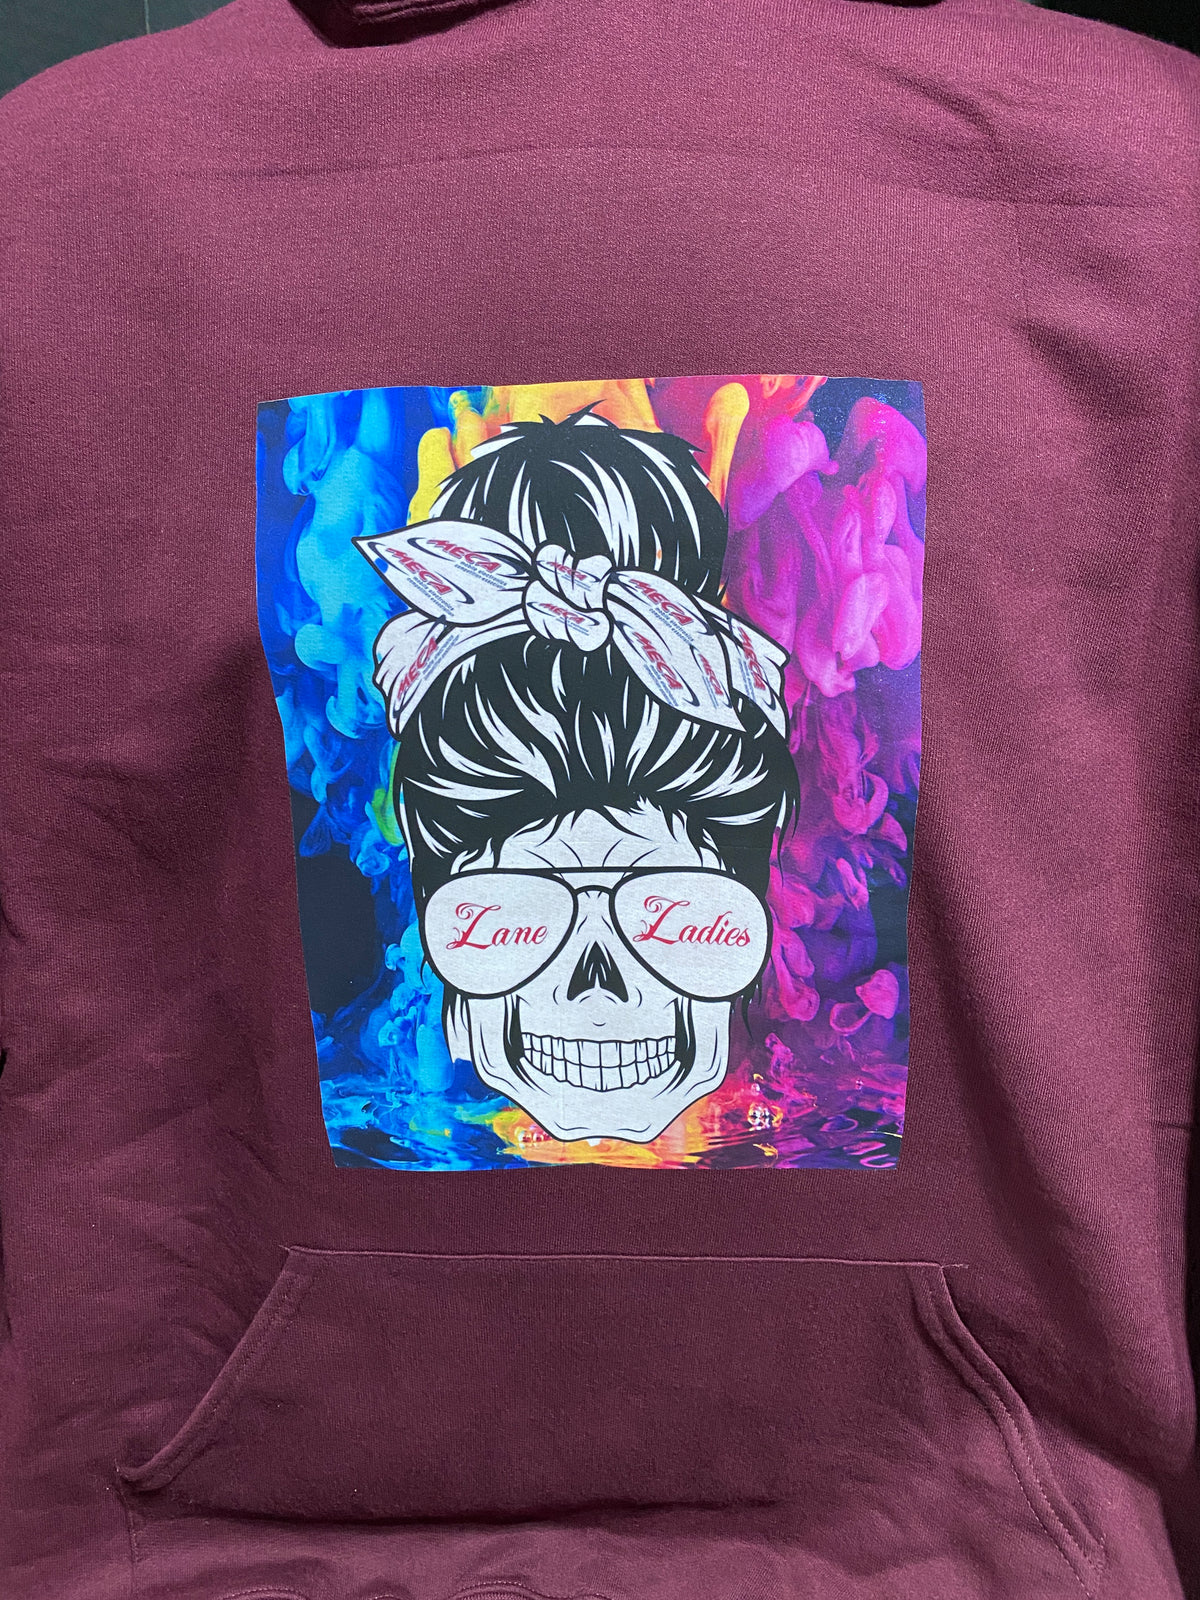 MECA Lane Ladies Skull Sweatshirt